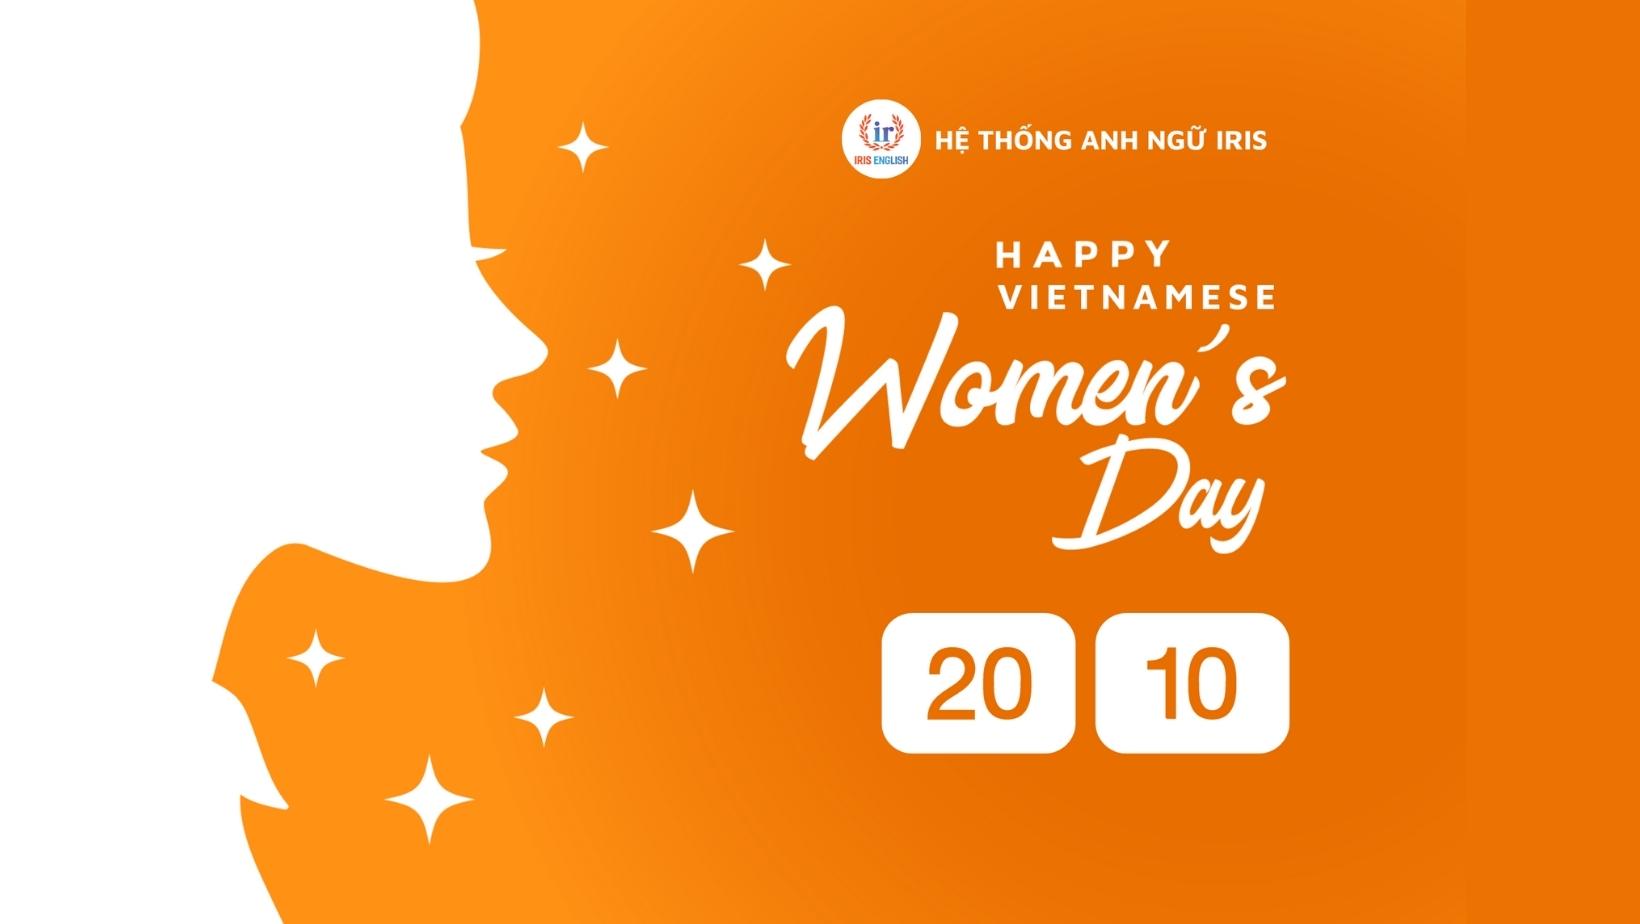 Hệ Thống Anh Ngữ Iris Happy Vietnamese Women's Day 20 10